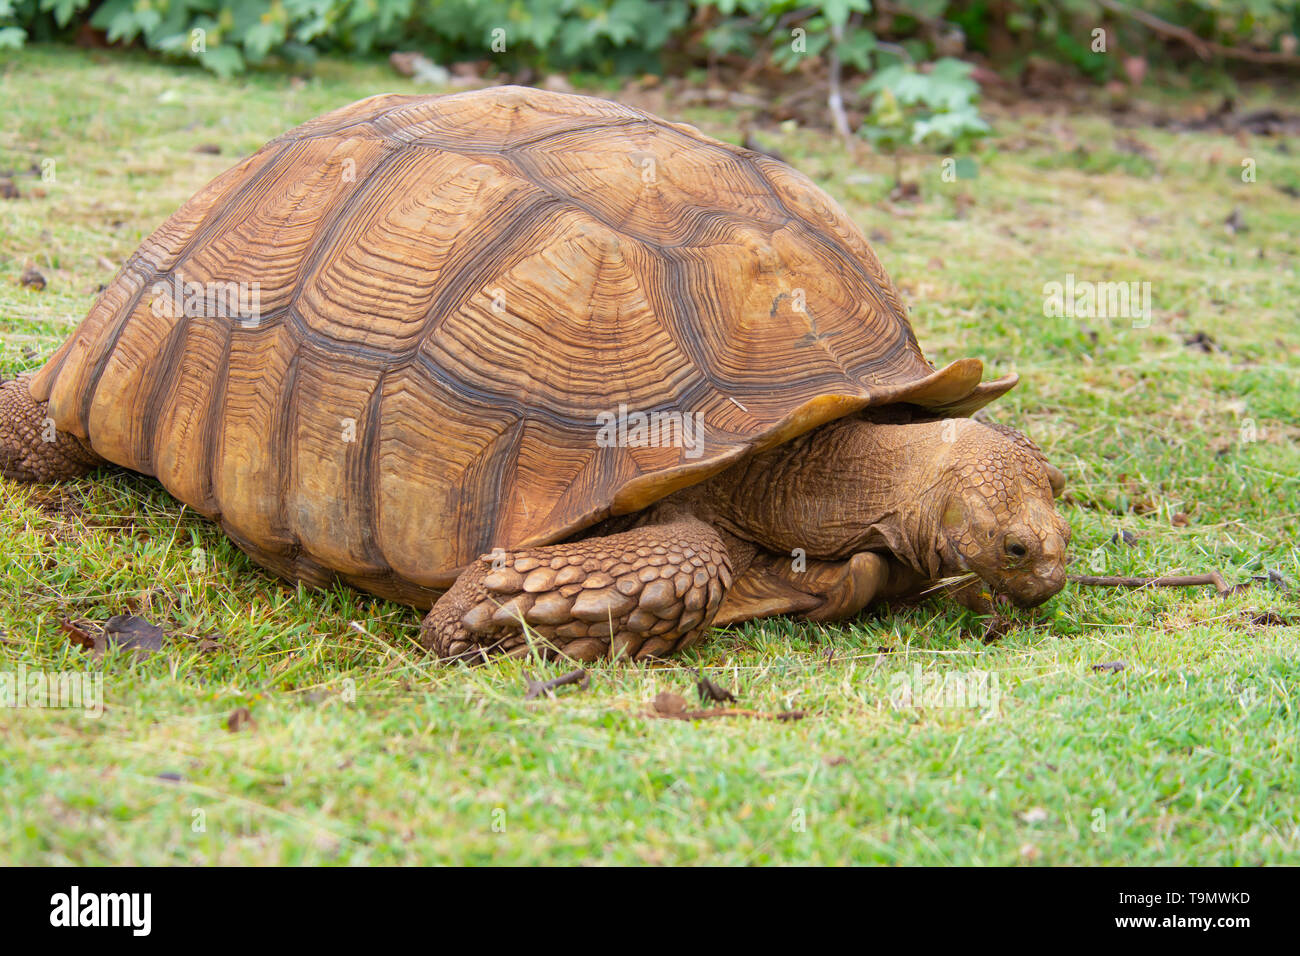 An African spurred tortoise, Centrochelys sulcata, feeding on grass, found in a tortoise refuge on the Hawaiian island of Kauai. Stock Photo